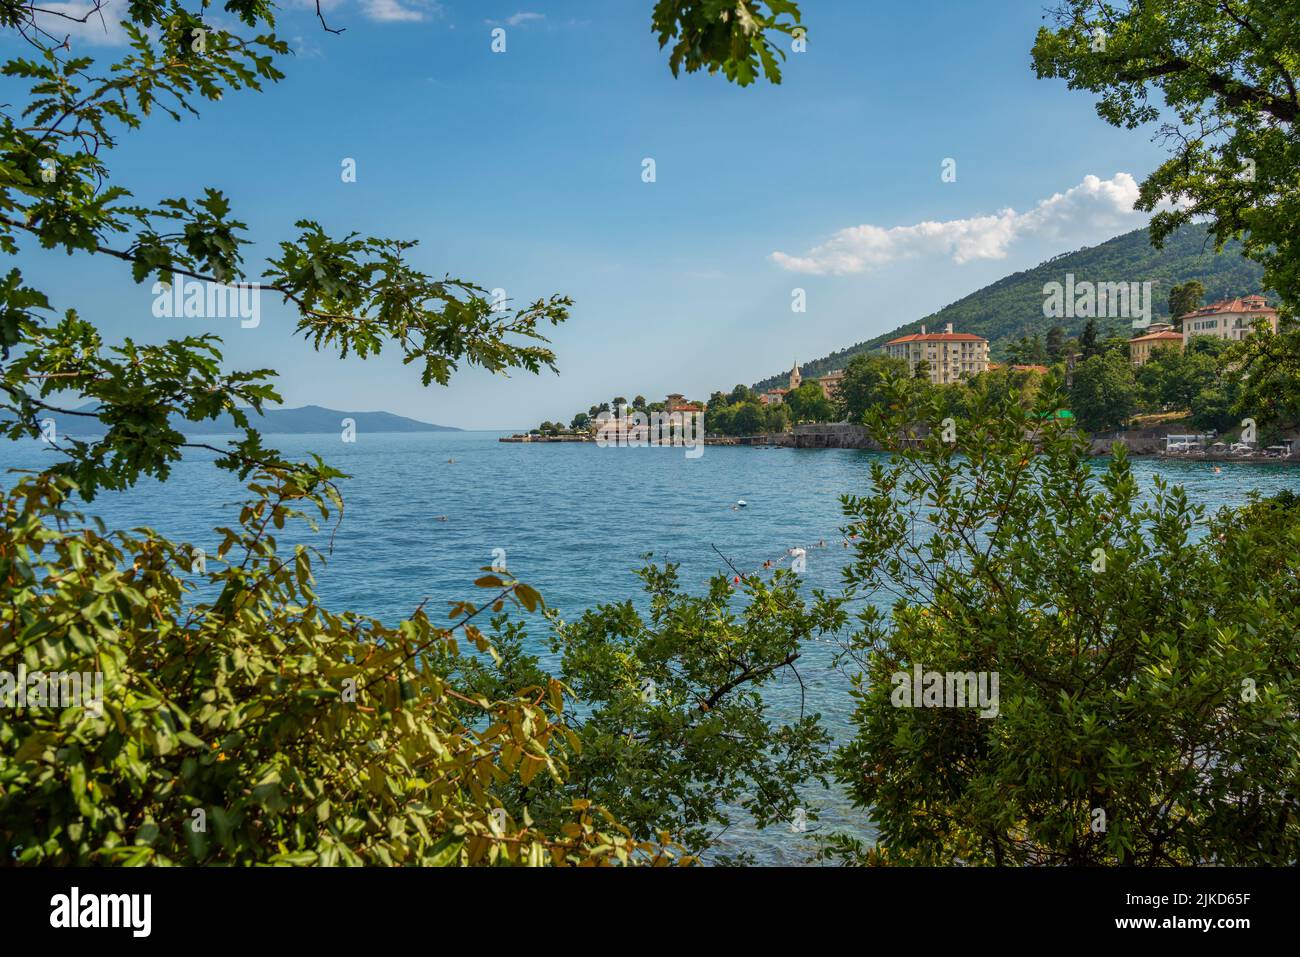 View of Lovran village and Adriatic Sea, Lovran, Kvarner Bay, Eastern Istria, Croatia, Europe Stock Photo